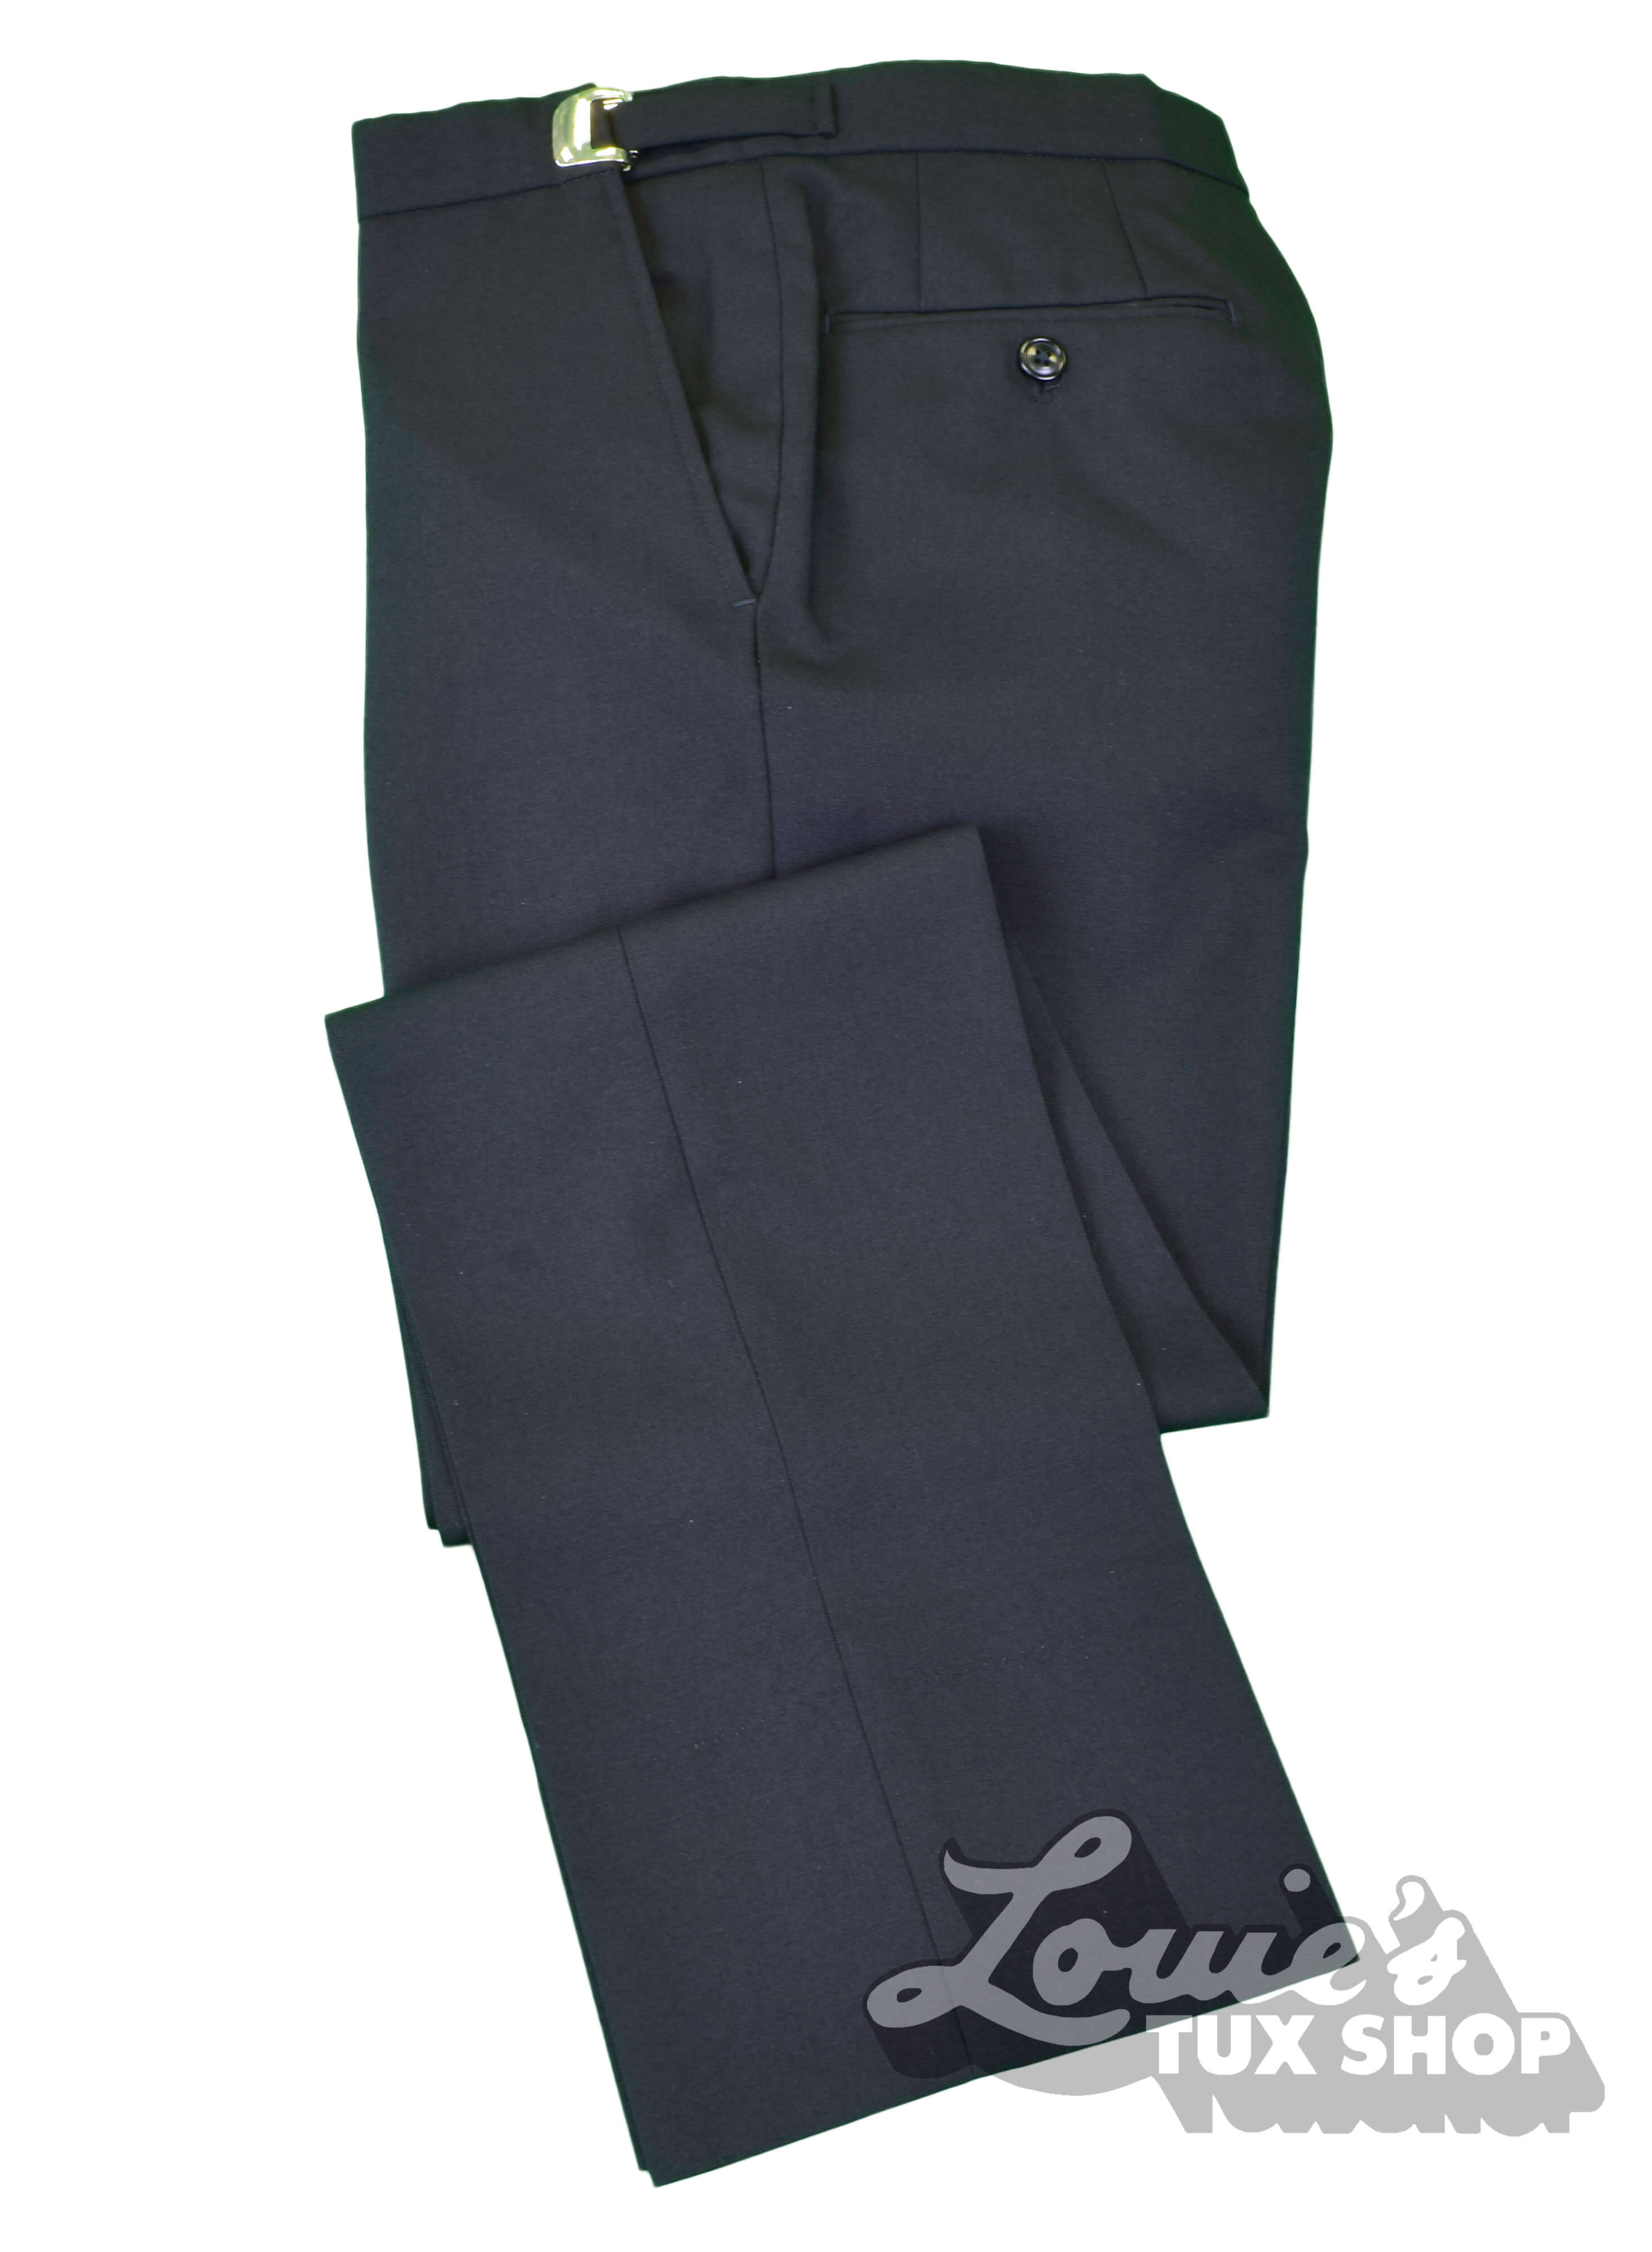 Dress Pants Slim Fit Gray Microfiber Wool Feel Dress Slacks - Tuxedos Online